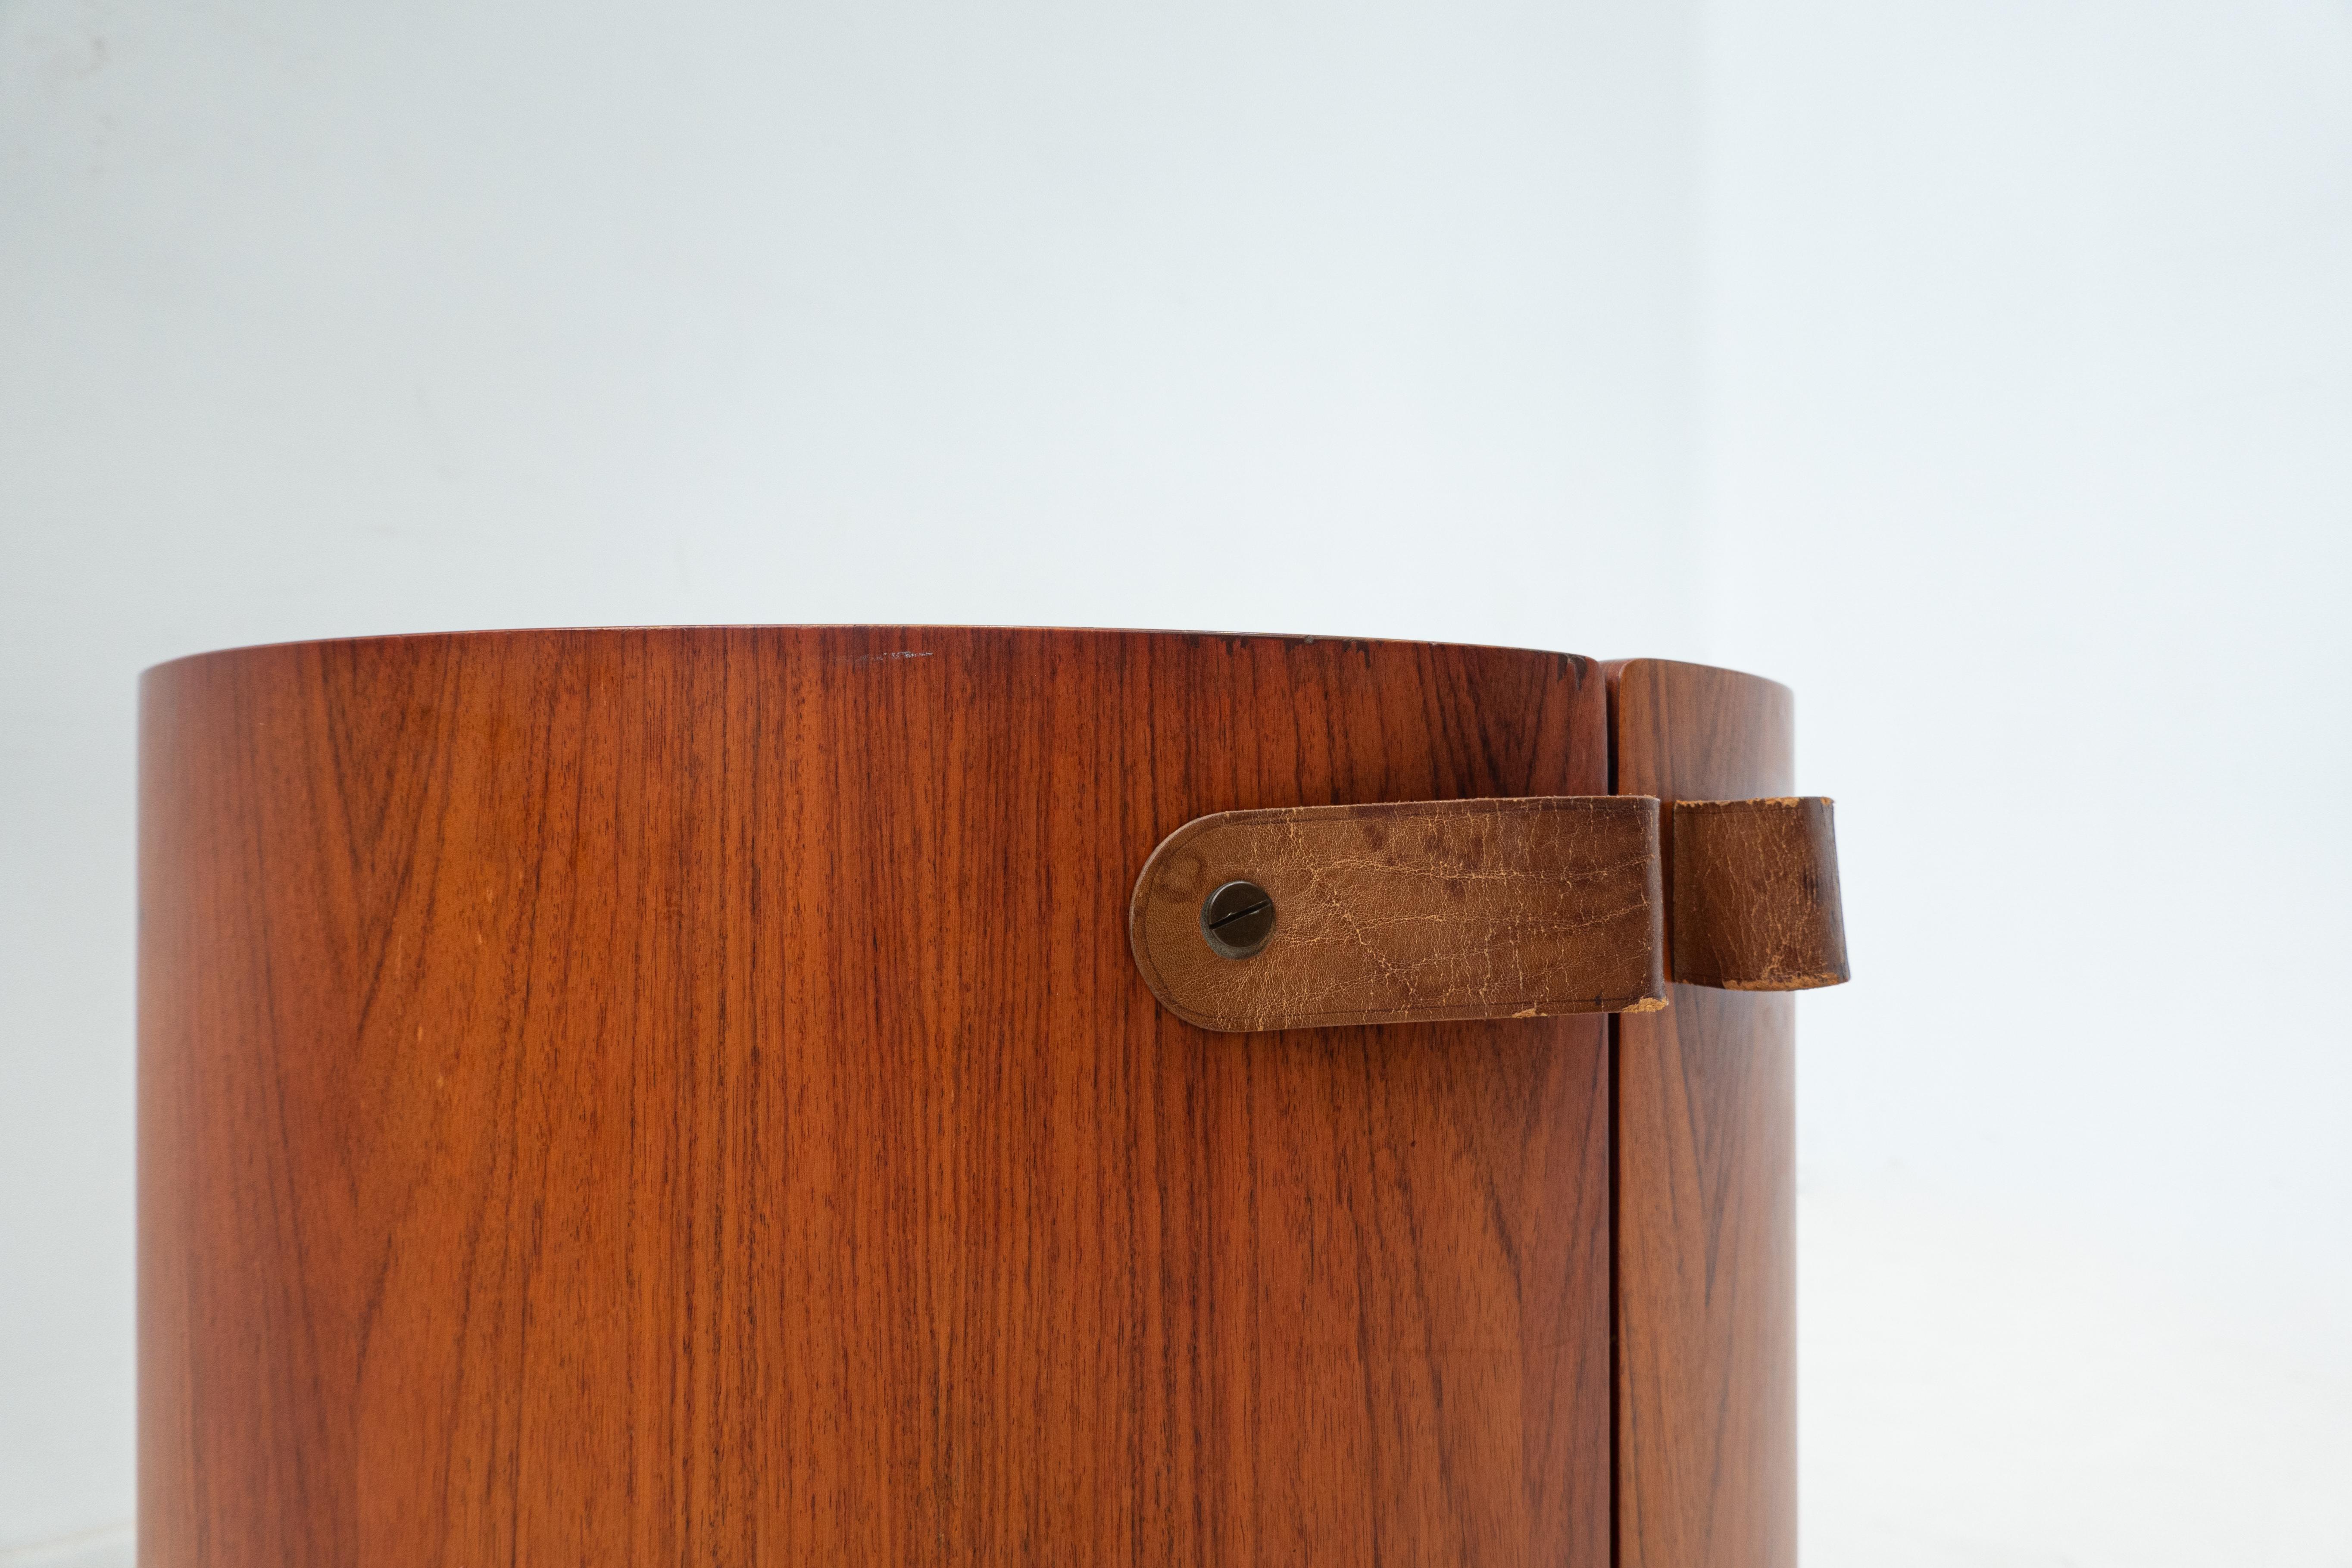 Mid-Century Modern wooden bar, leather handles, 1960s.